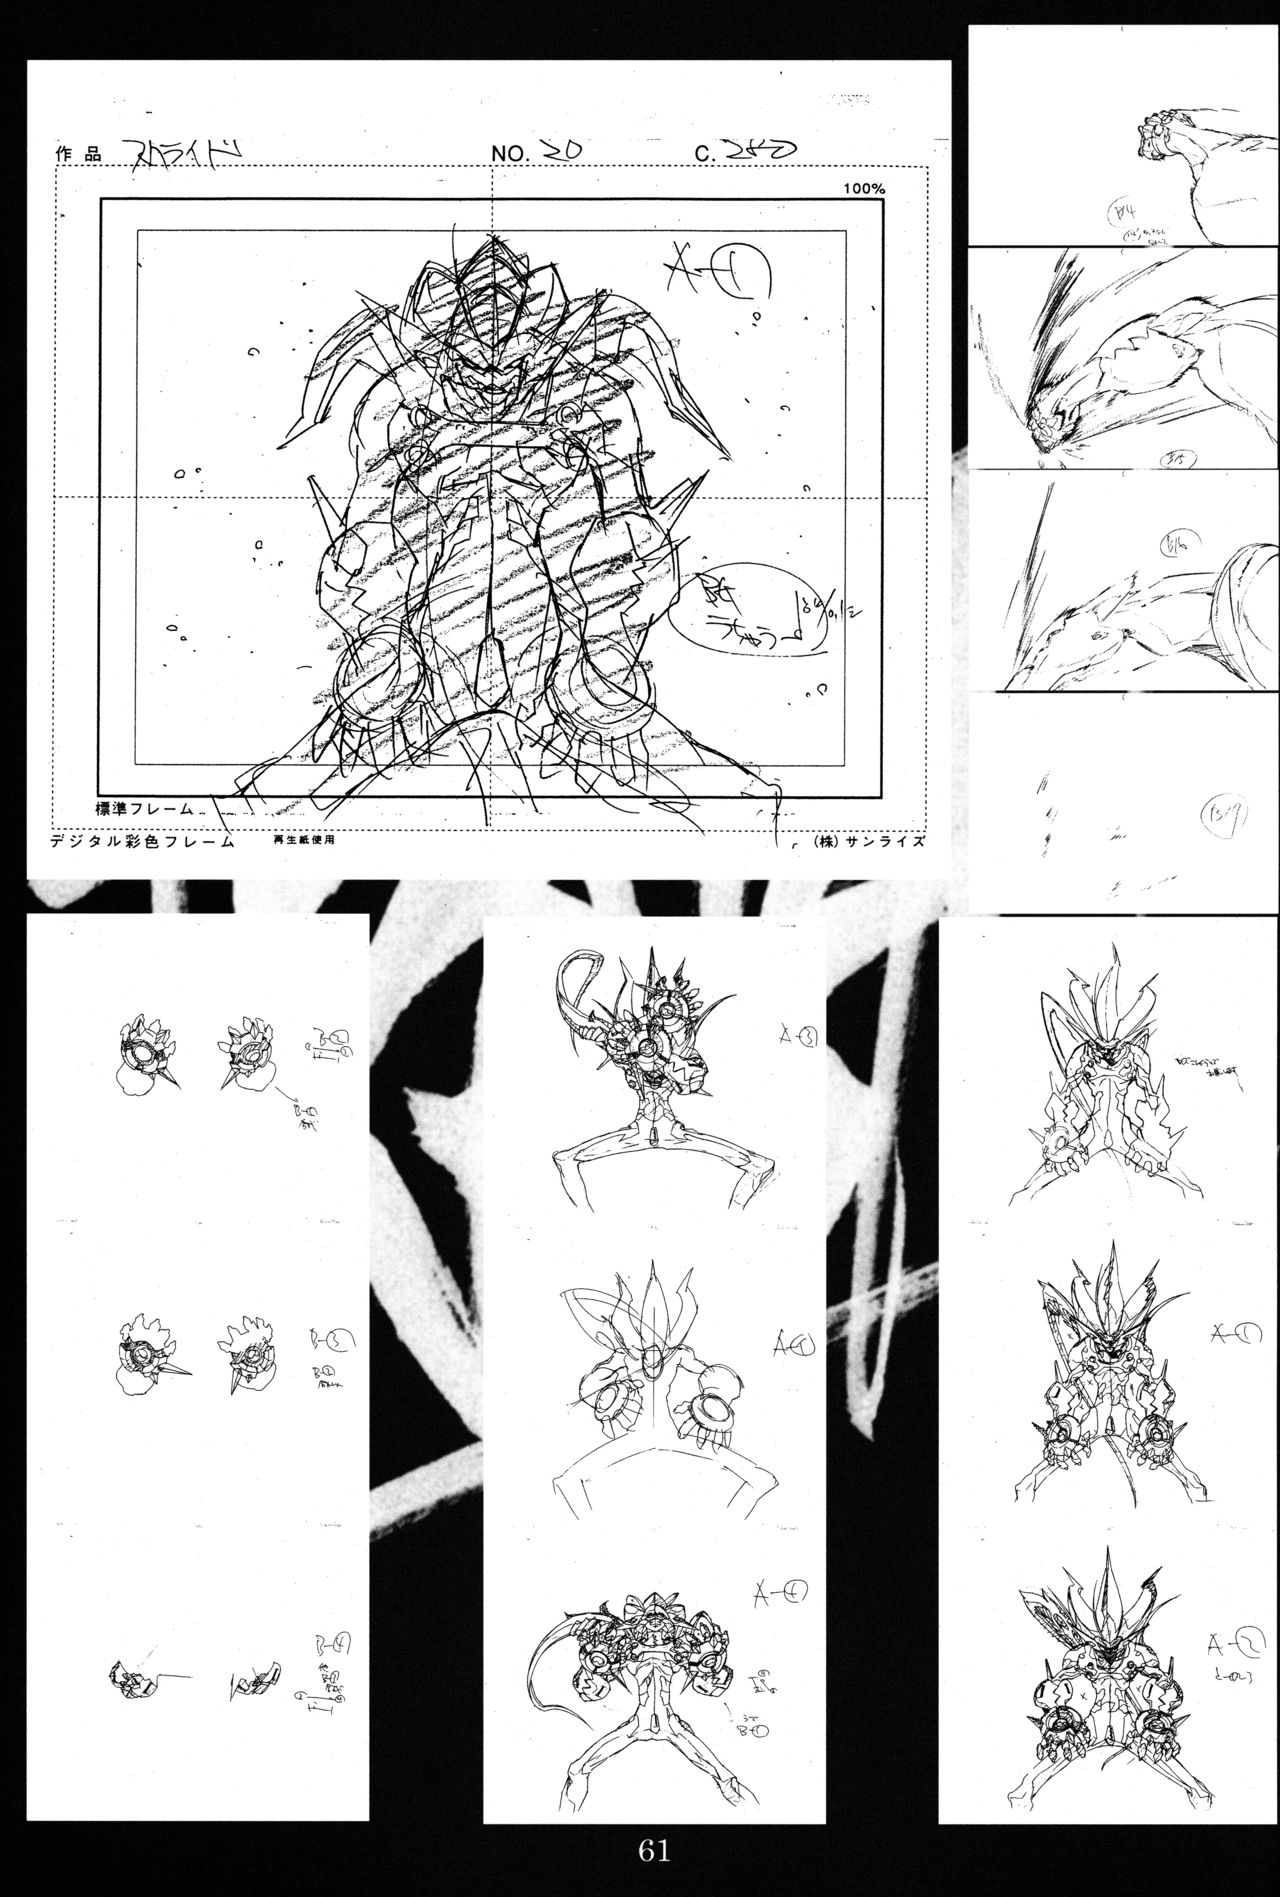 Burning G: Yosuke Kabashima Animator 20th Anniversary Book 59